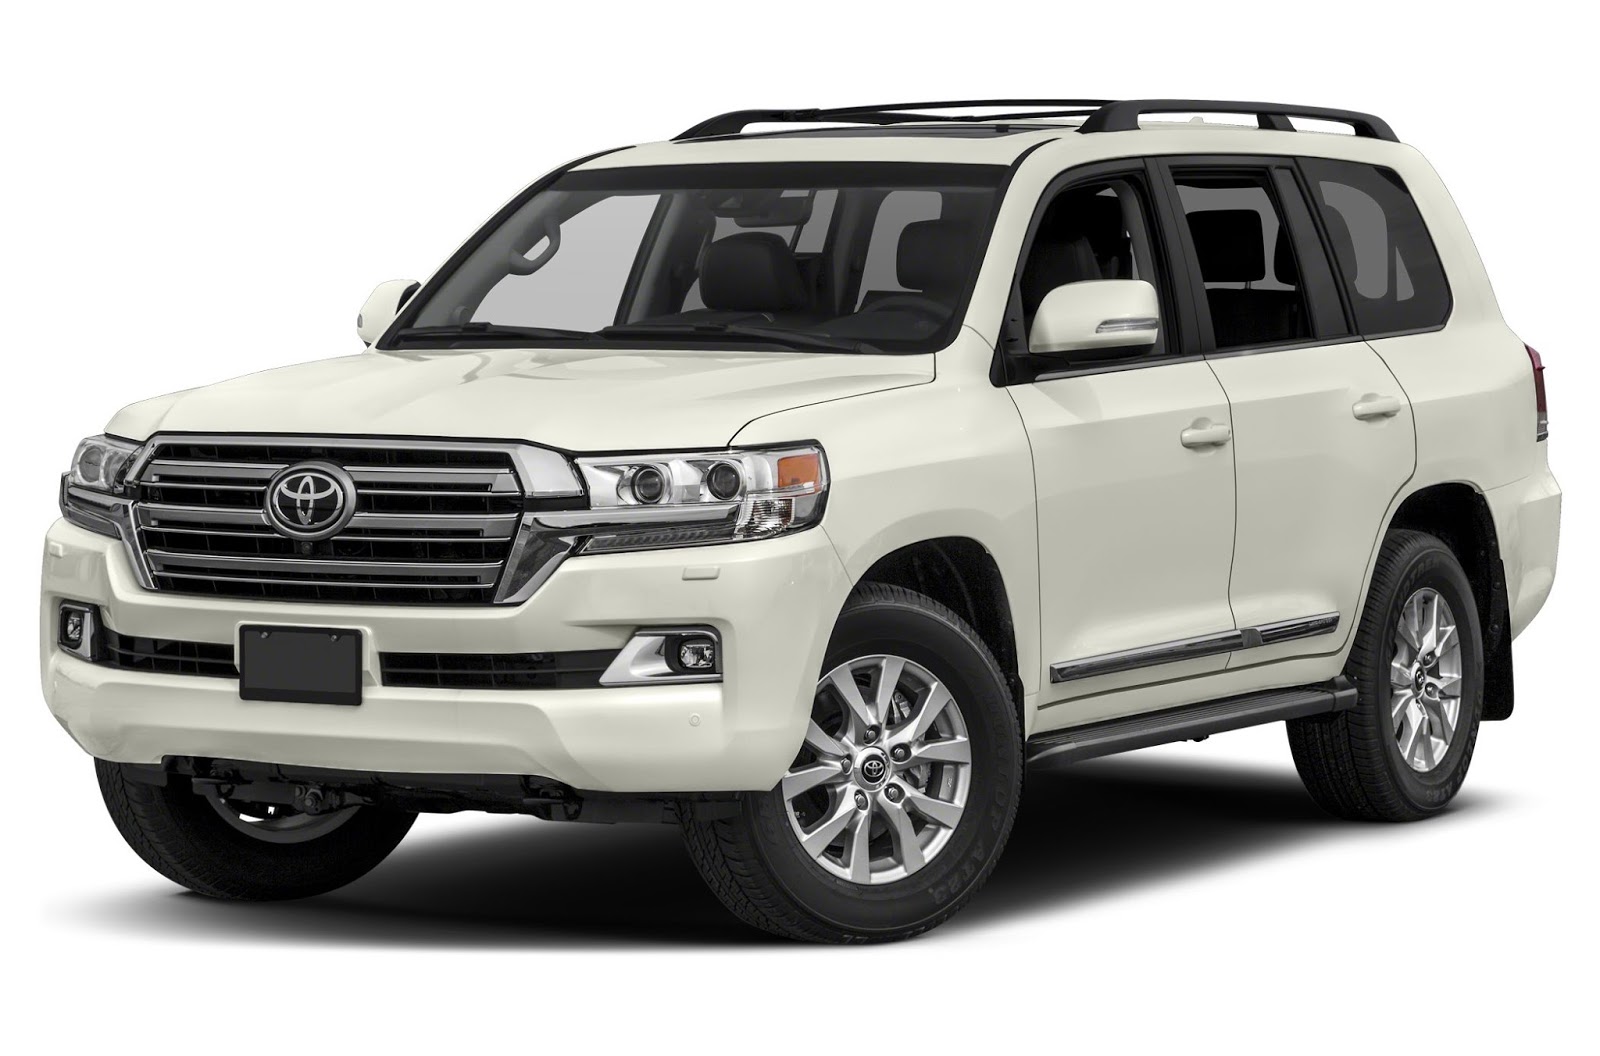 List of Toyota Land Cruiser Types Price List Philippines